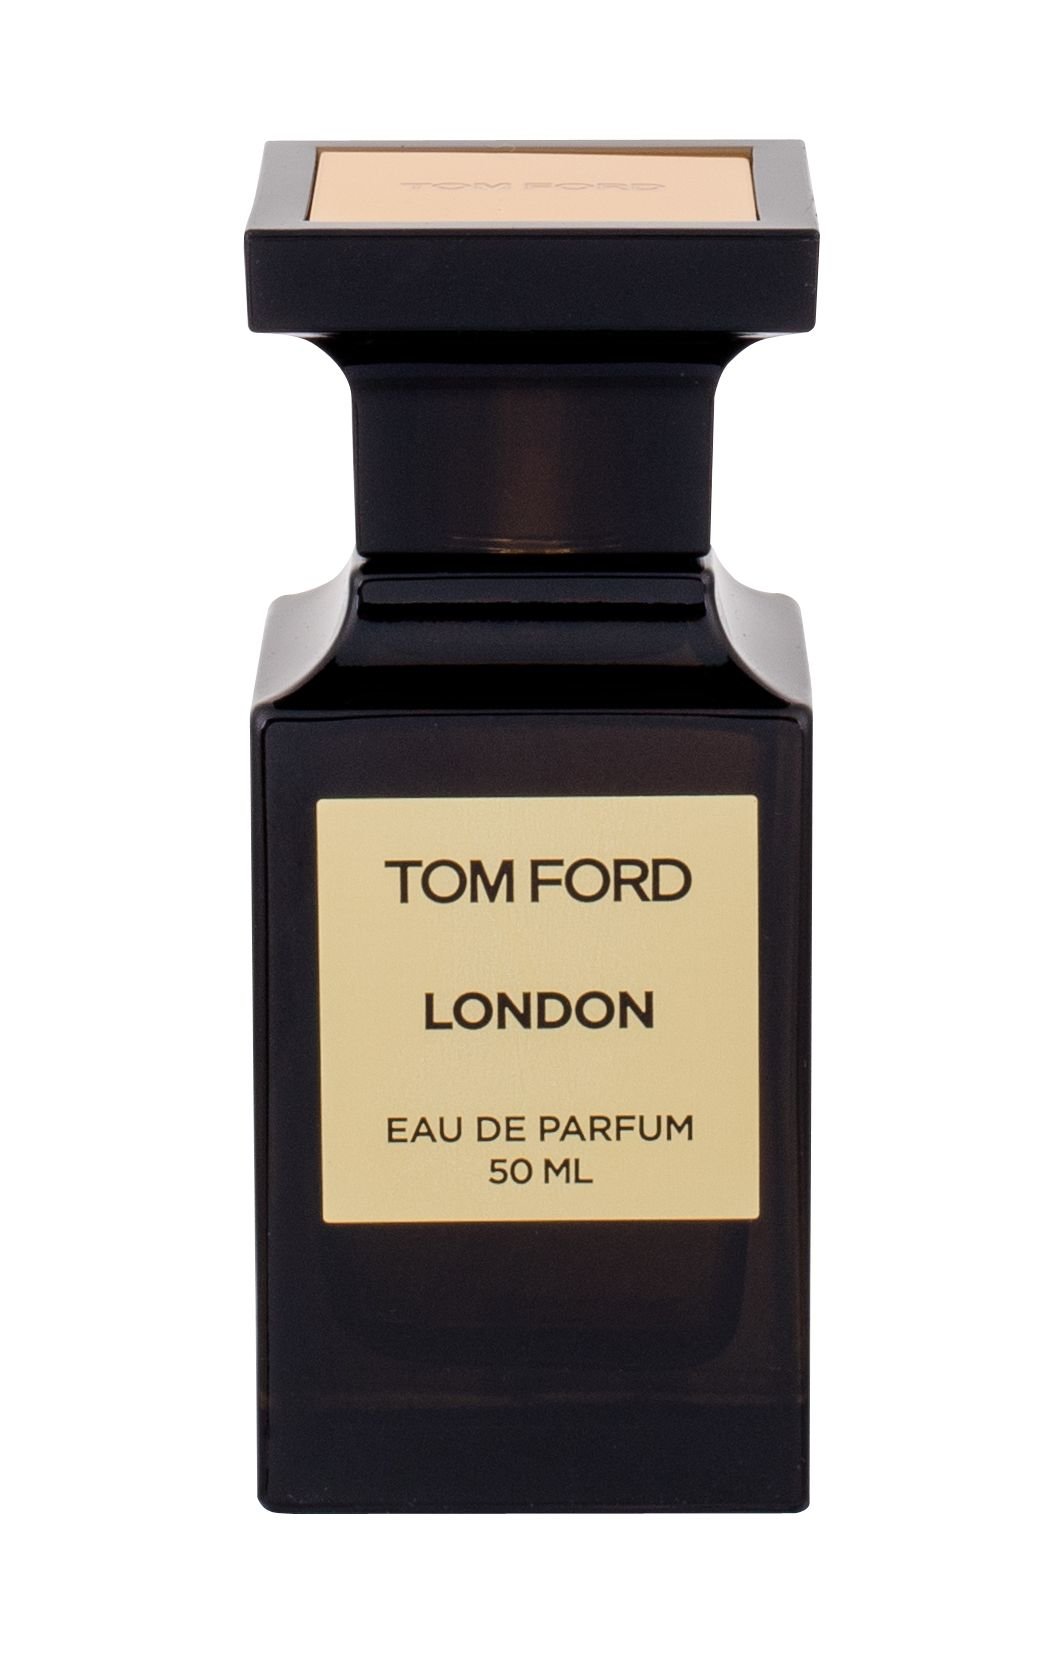 Tom Ford London